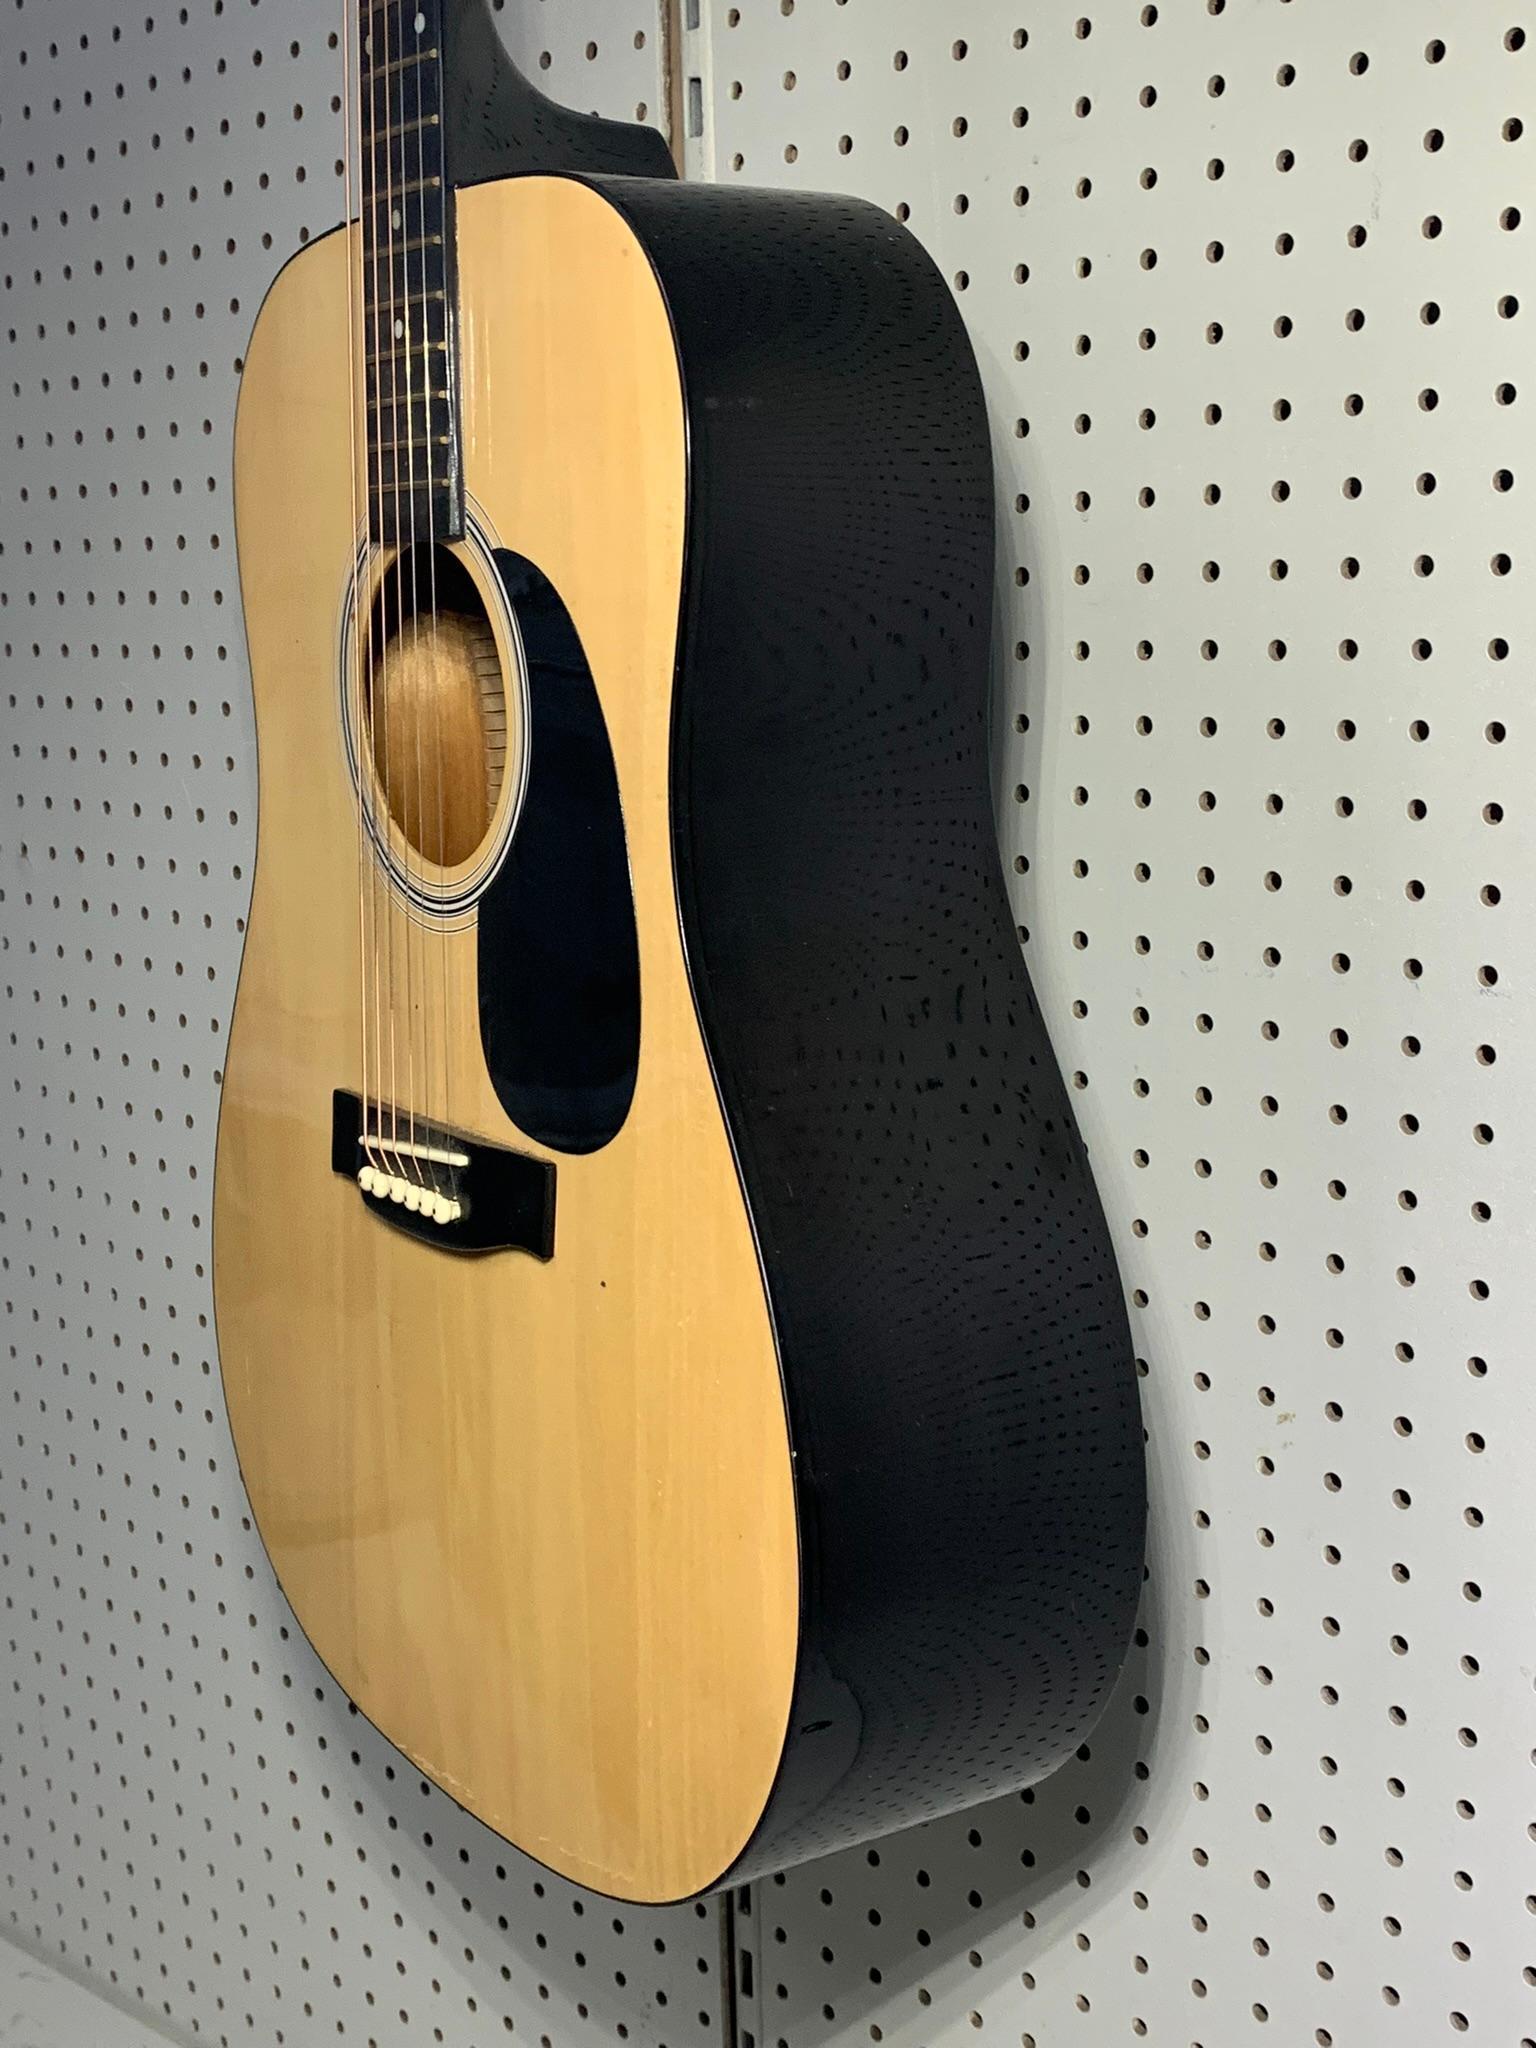 Squier Acoustic Guitar